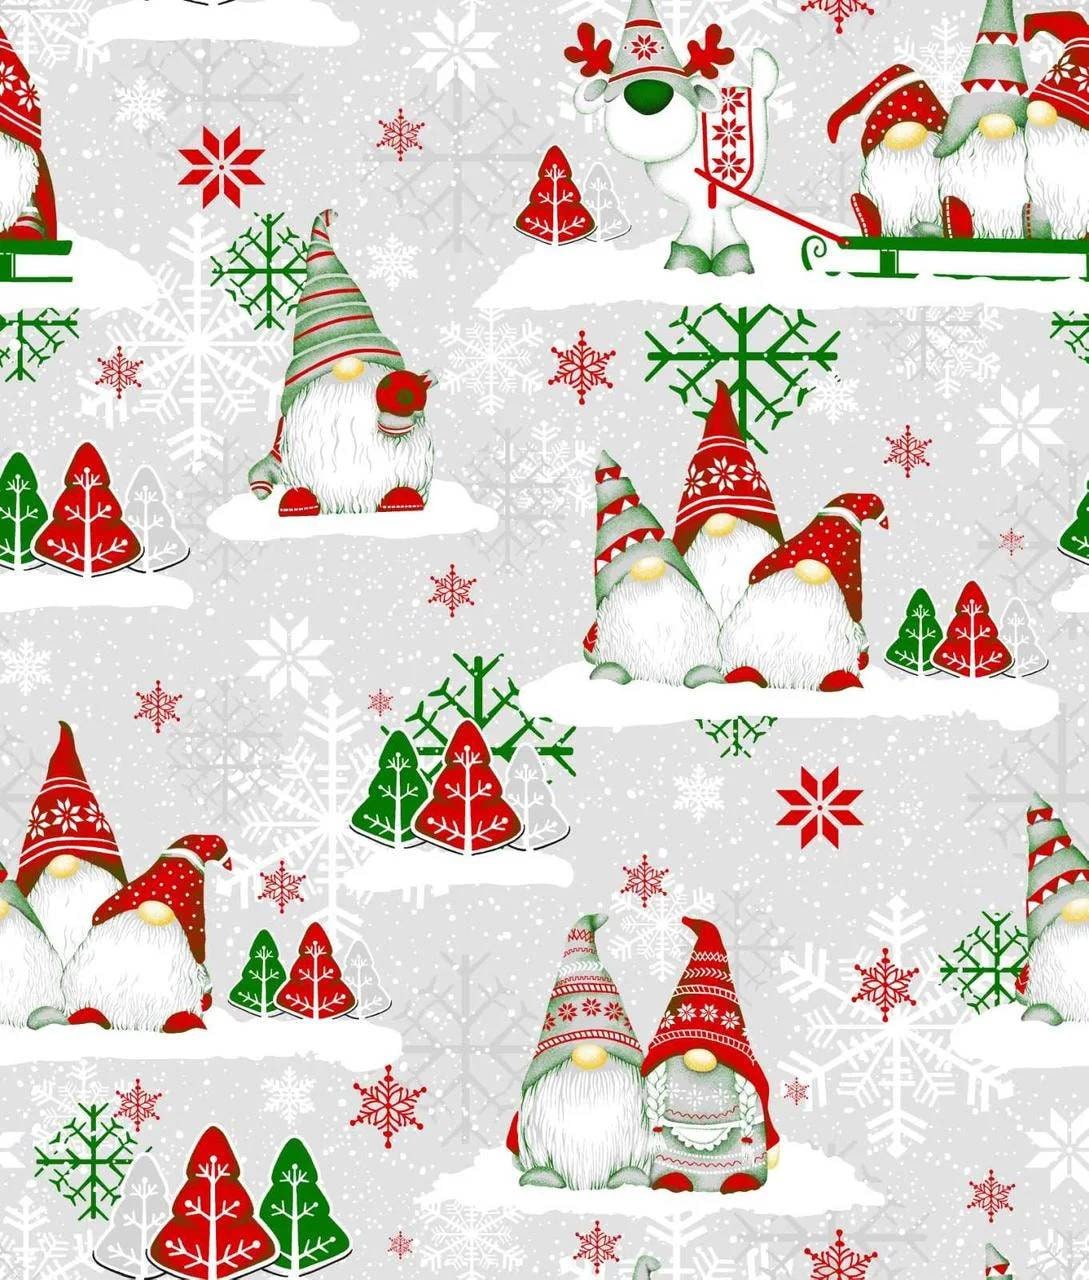 Letters to Santa Fabric, Christmas Fabric, 100% Cotton, Stockings Fabric,  Fabric by the yard, Tree Skirts Fabric, Holiday & Seasonal